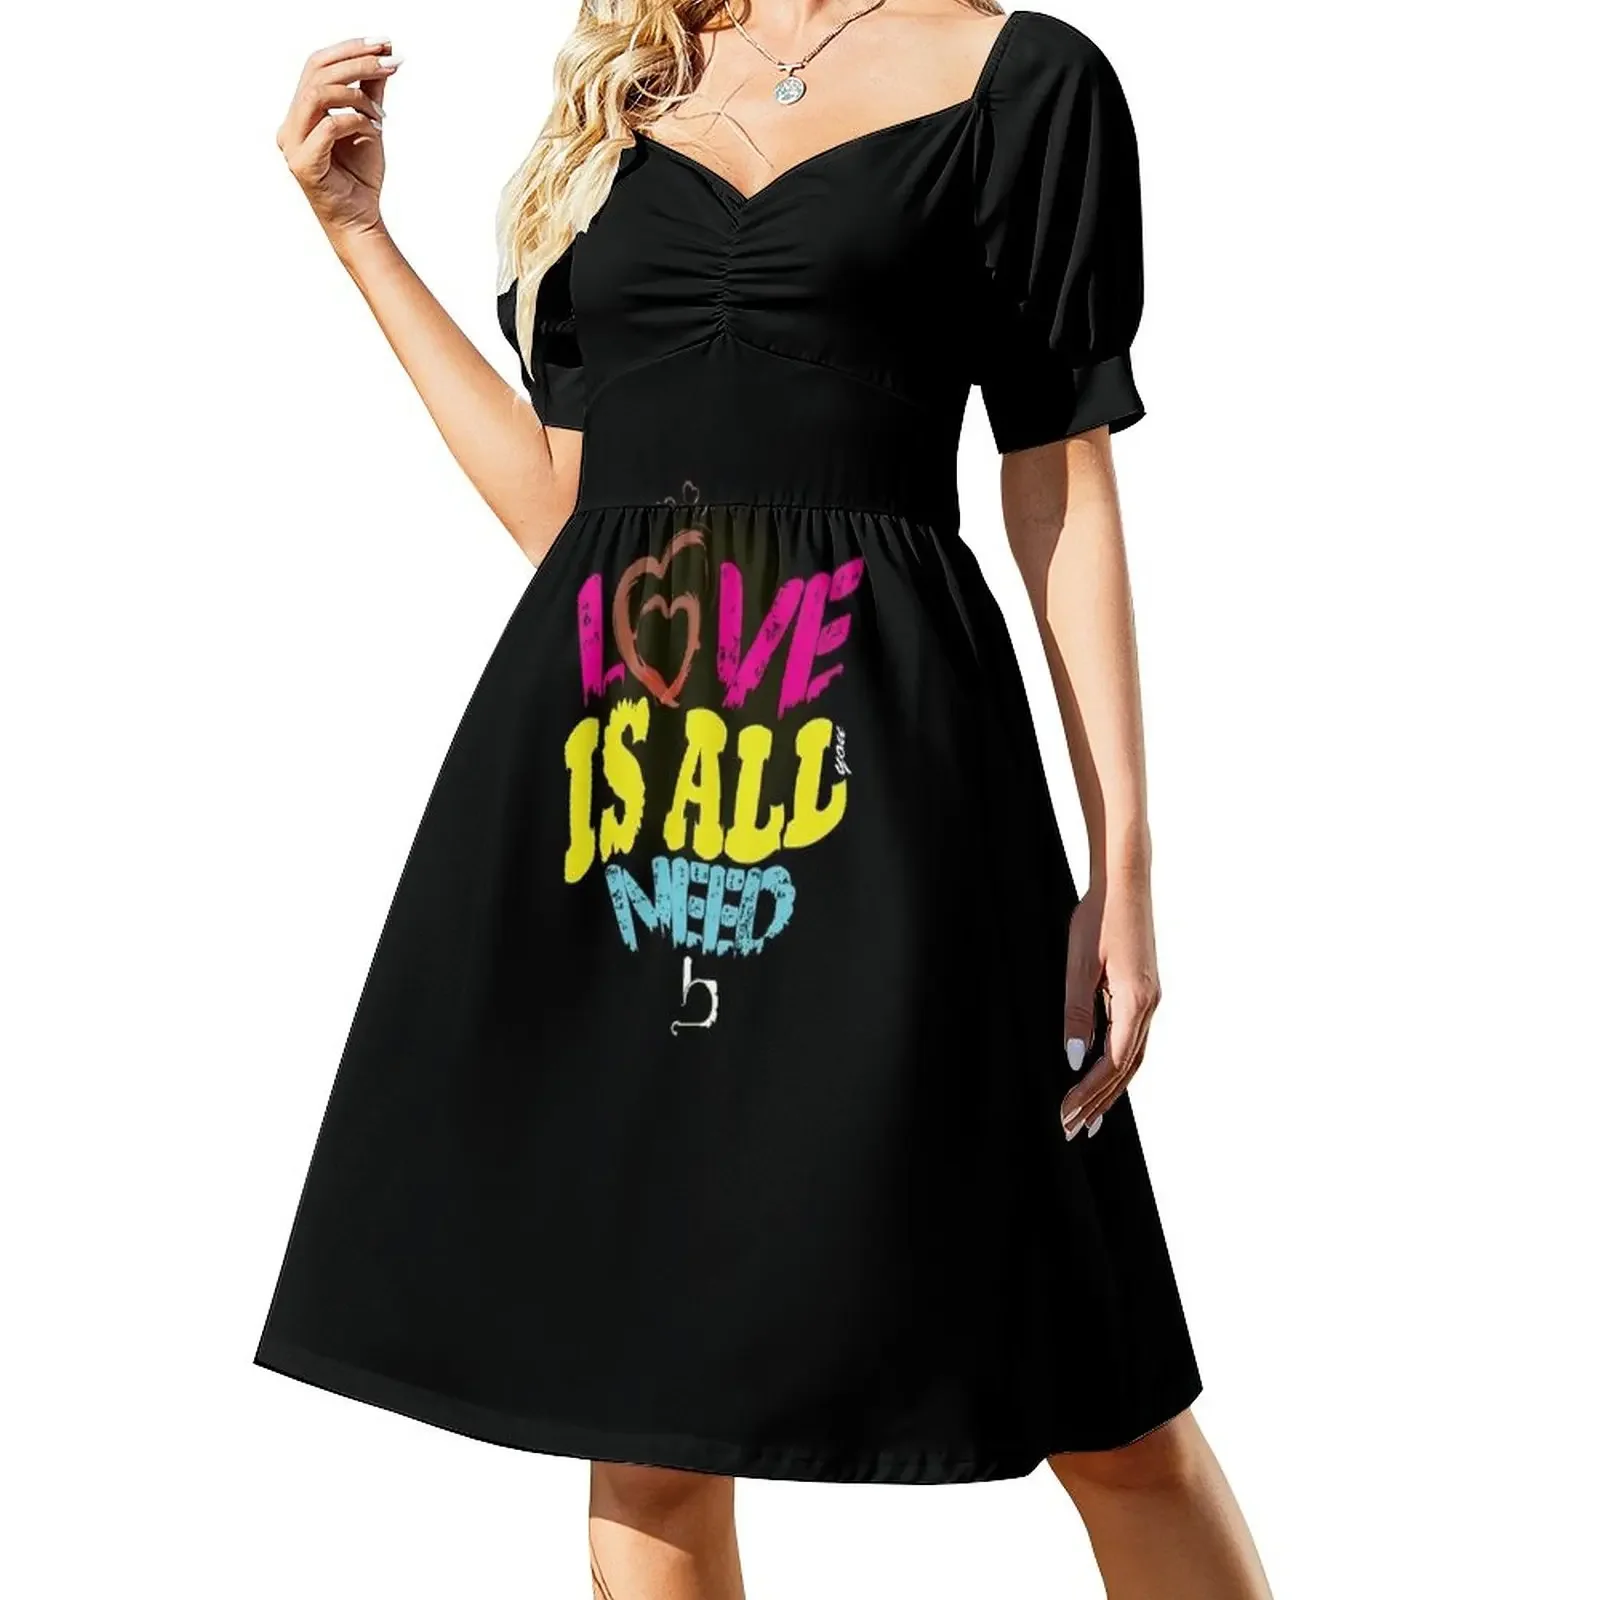 

All you need is love Sleeveless Dress dress dresses women's clothing korea stylish Woman clothing